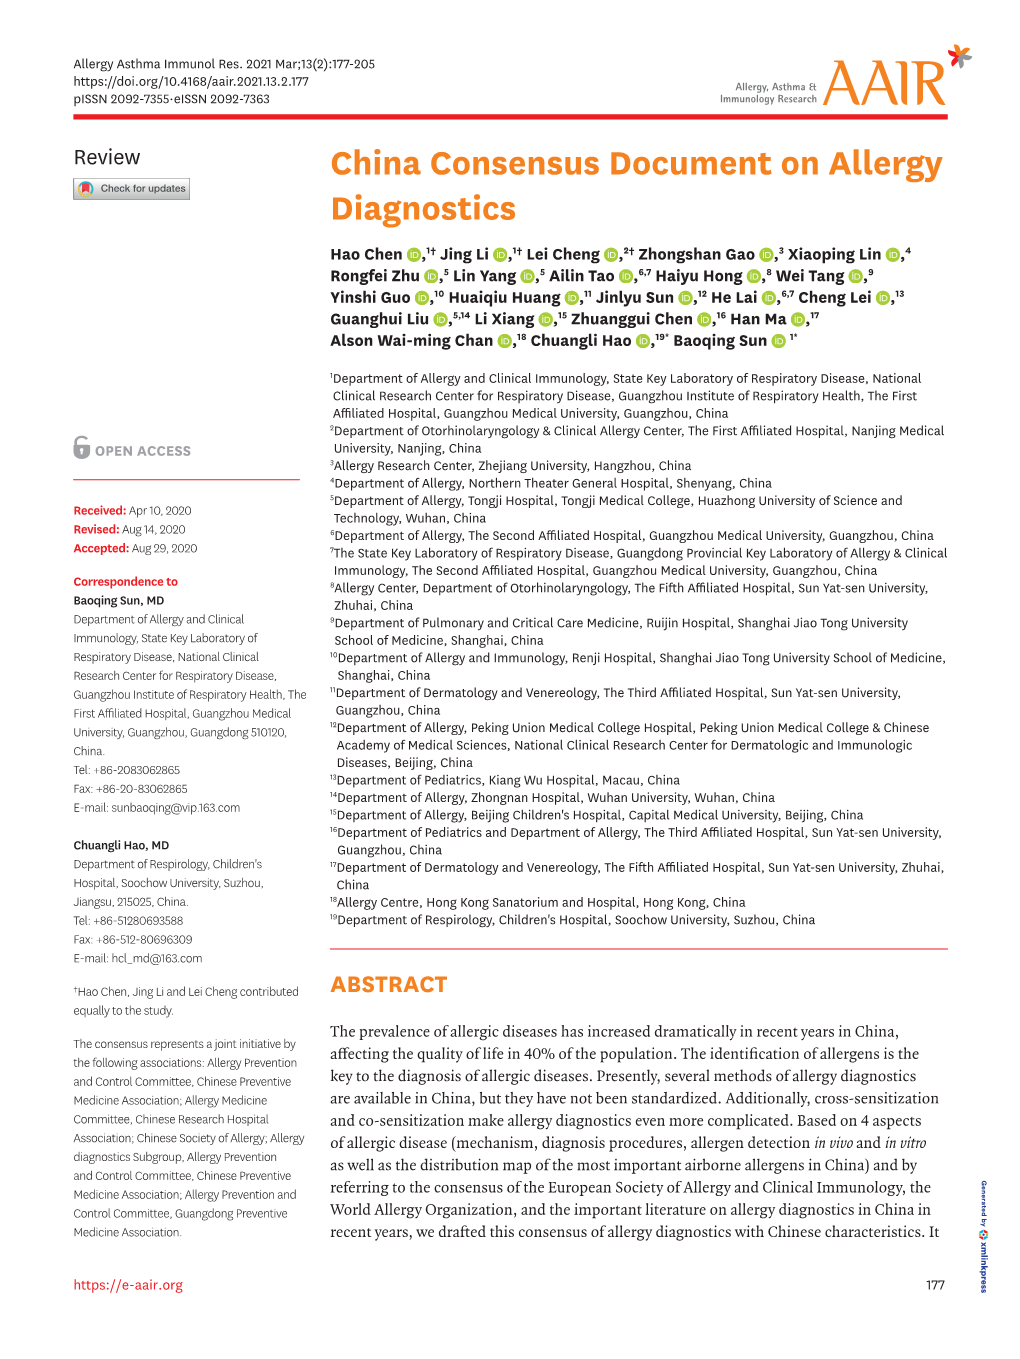 China Consensus Document on Allergy Diagnostics